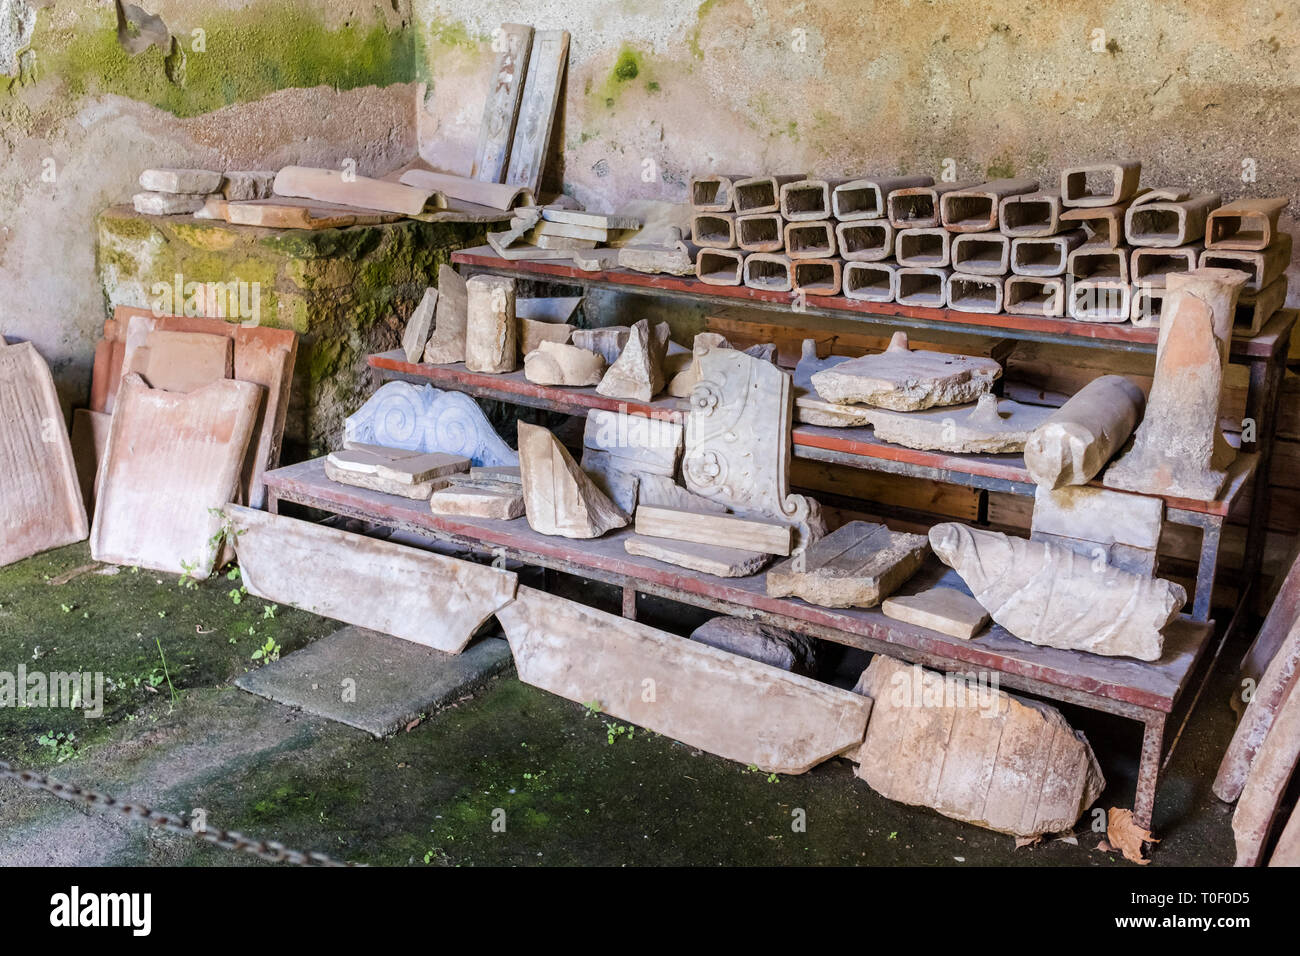 Display of artifacts at Villa Romana, an ancient Roman archaeological site hidden in the village of Minori, Italy on the Amalfi Coast Stock Photo